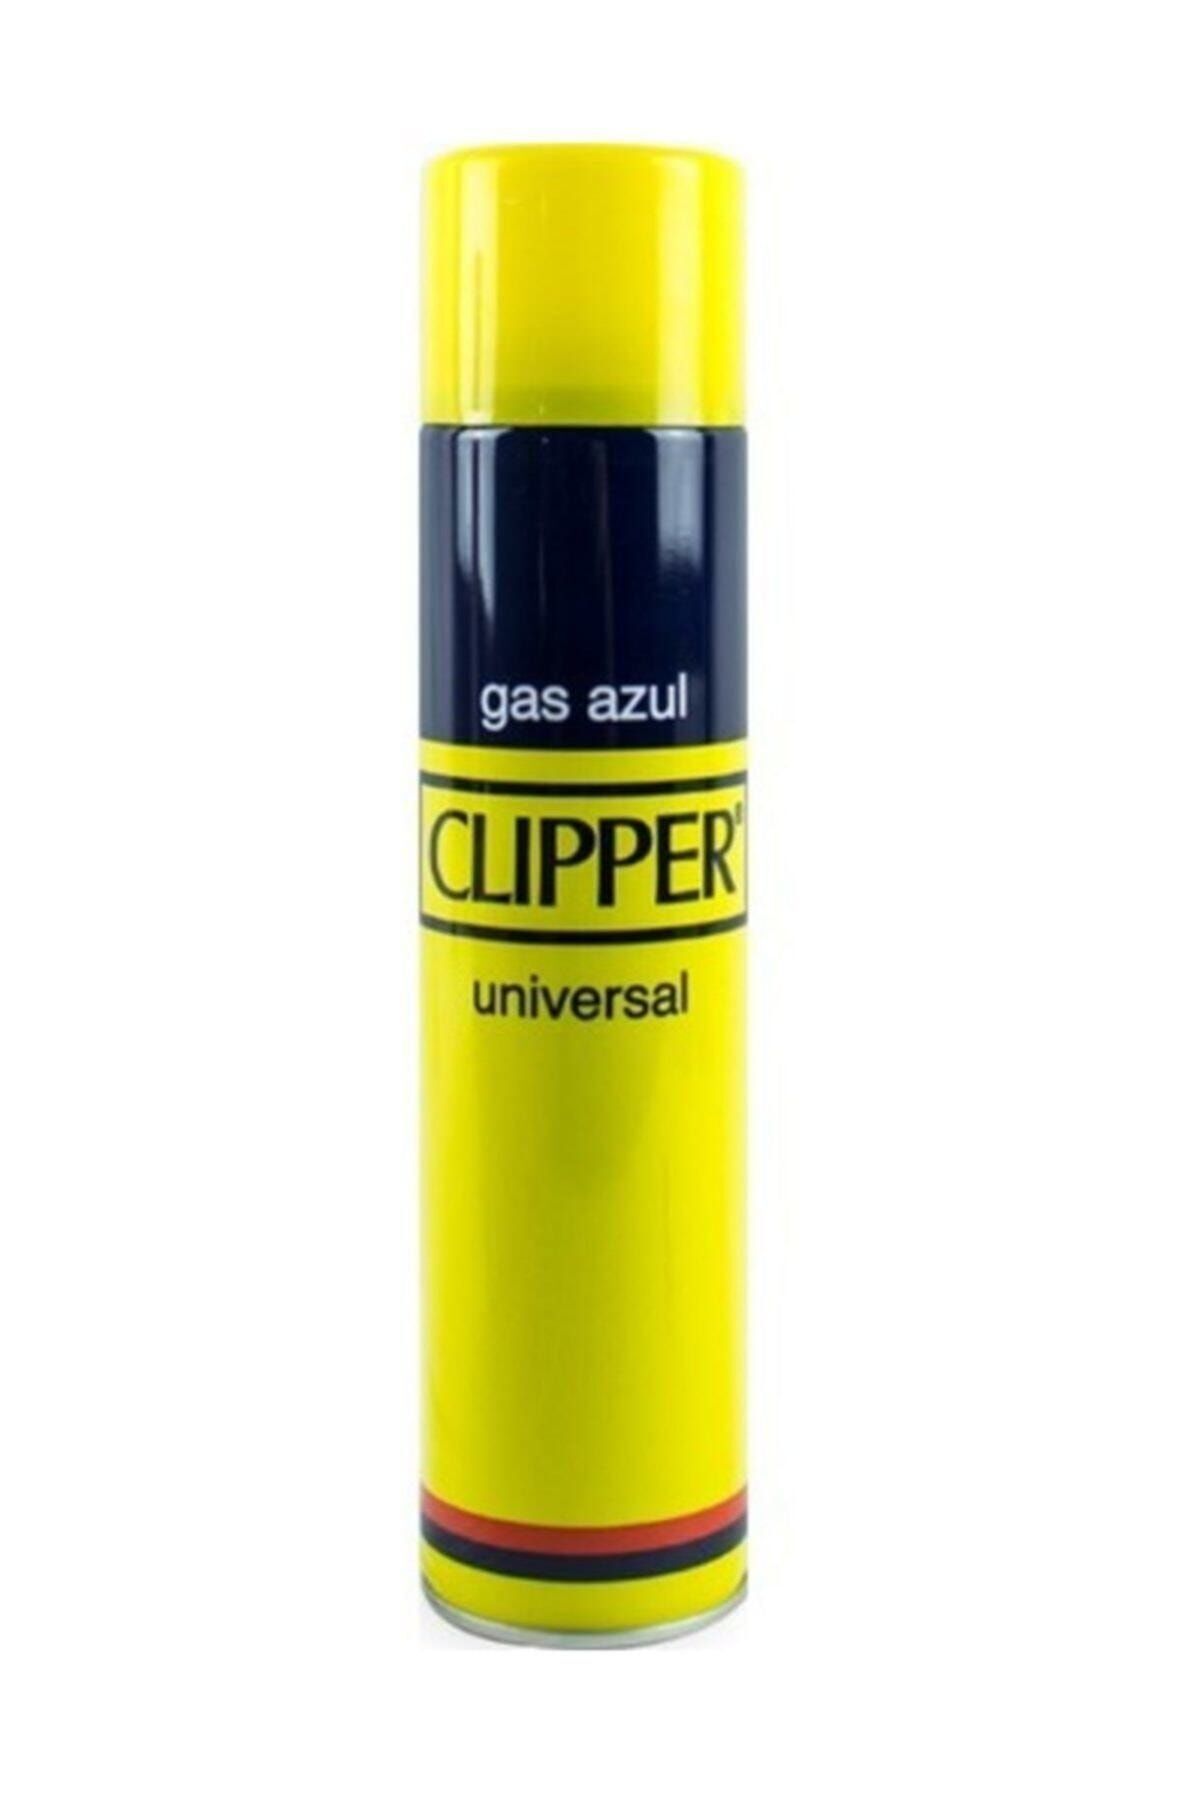 Clipper Çakmak Gazı Orjinal Ürün 300 ml